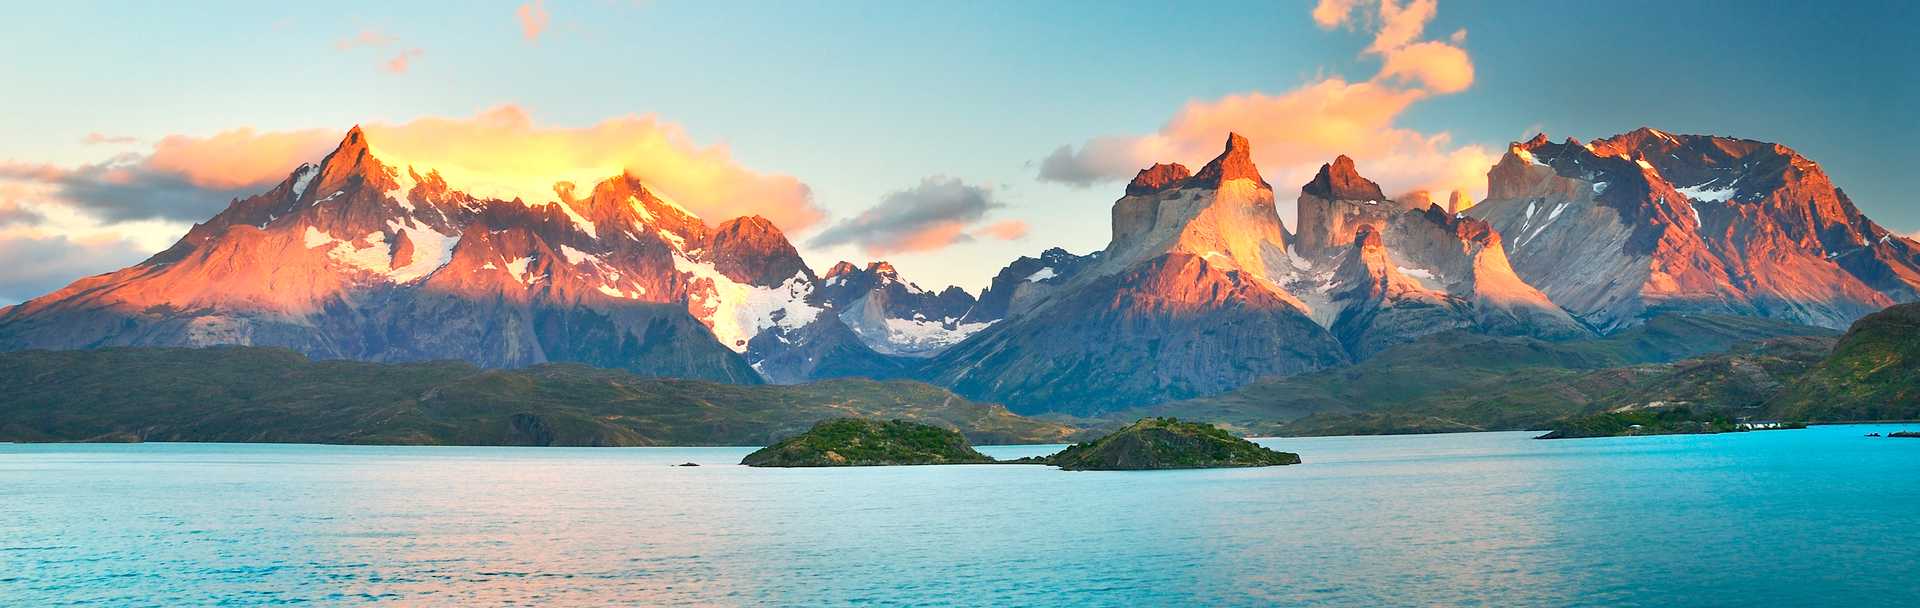 Patagonia Tours - Mountain views in Argentina